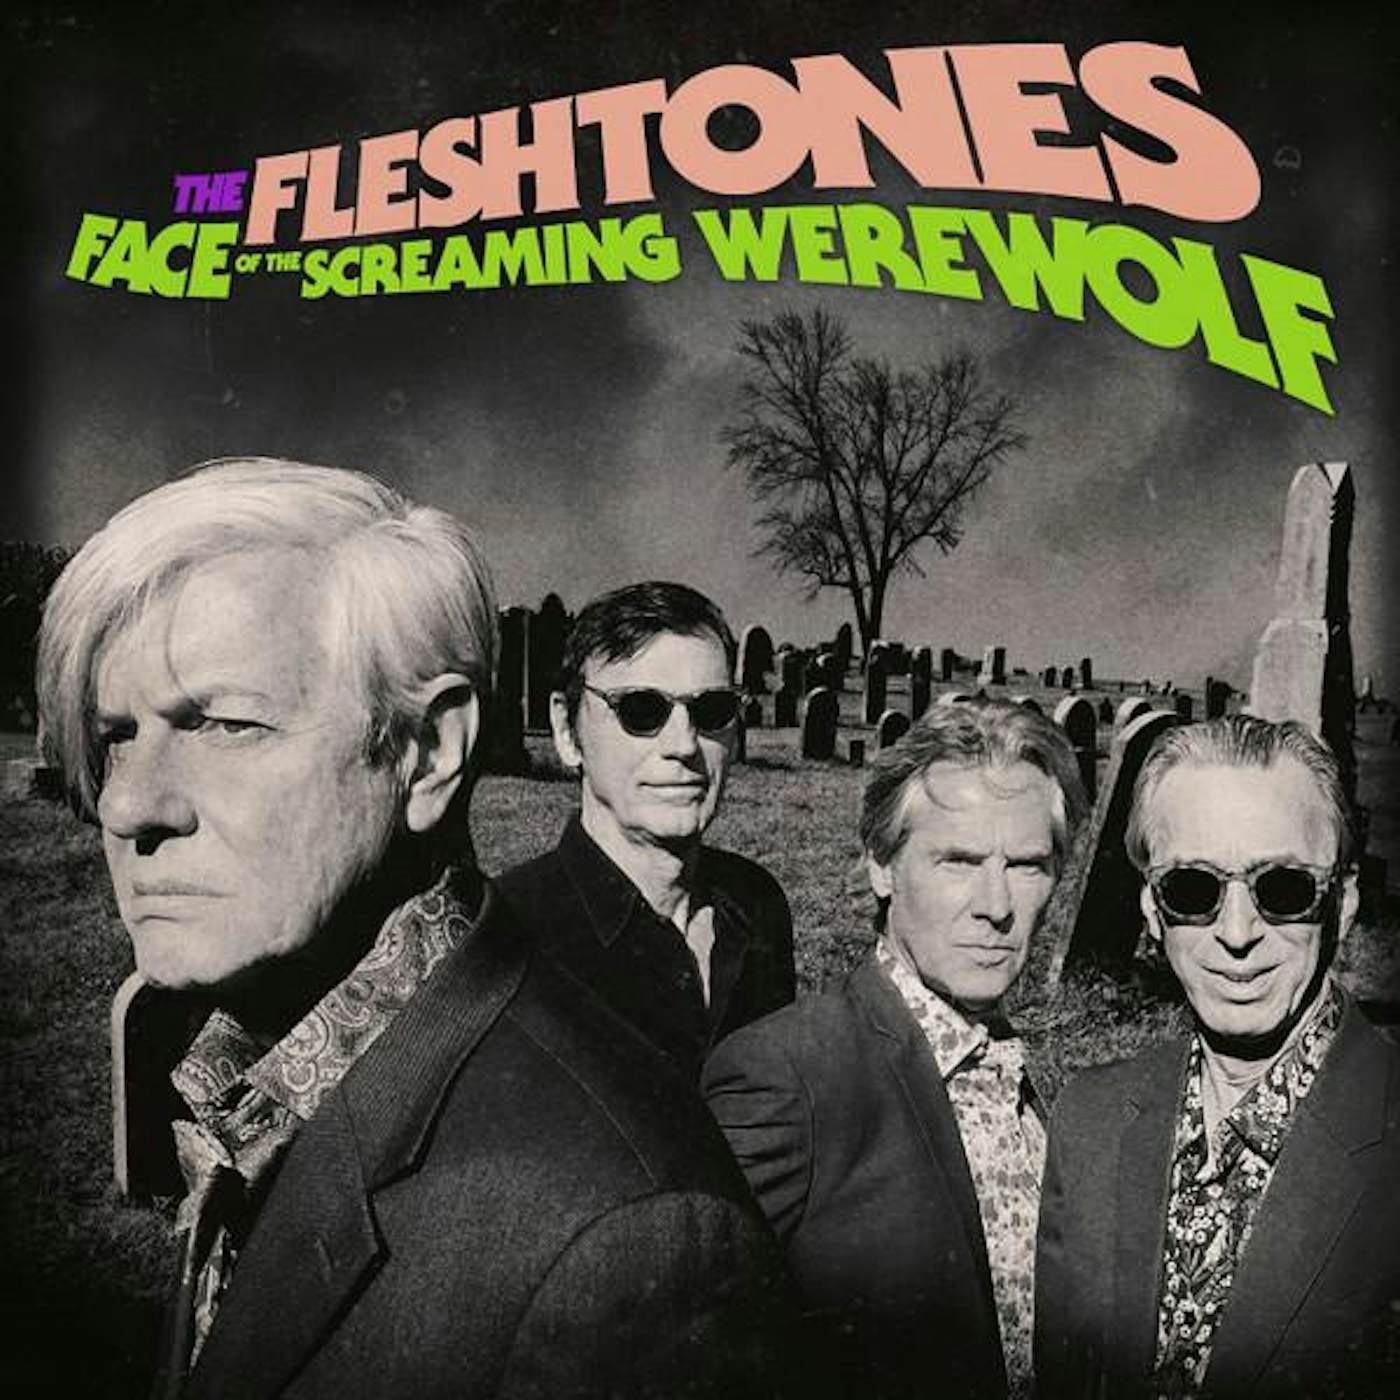 The Fleshtones FACE OF THE SCREAMING WEREWOLF (DL CARD) Vinyl Record